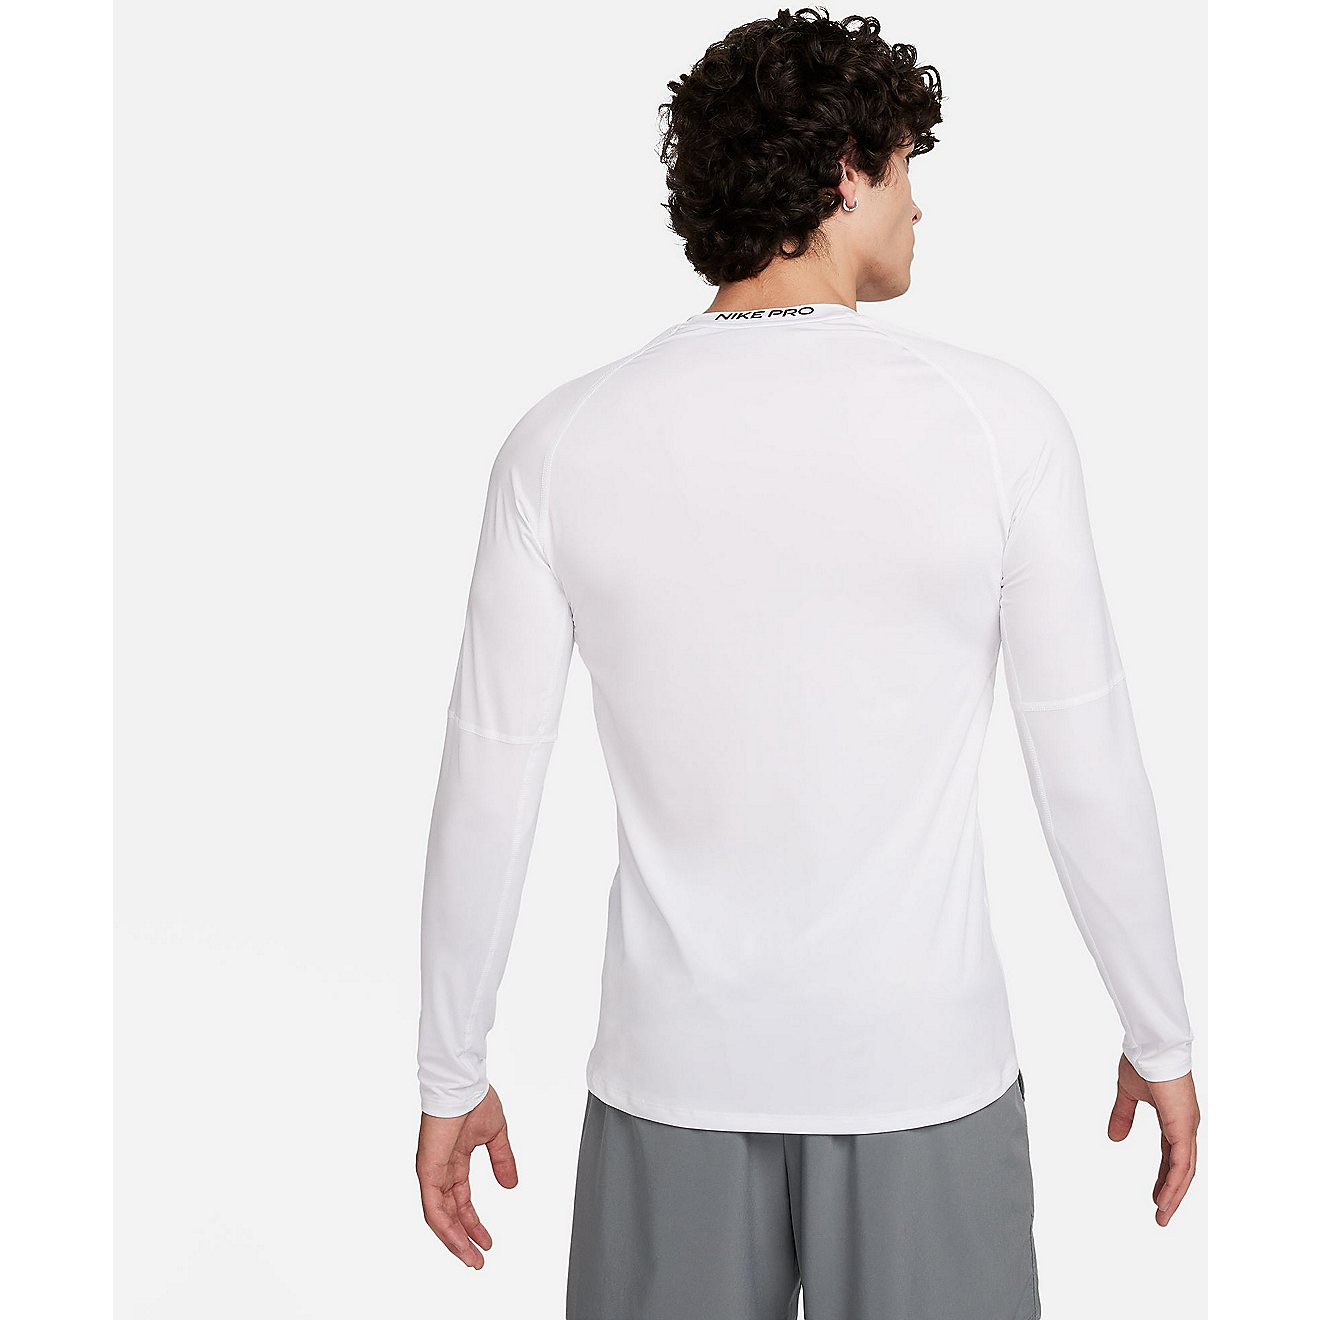 Nike Men's Slim Long Sleeve T-shirt                                                                                              - view number 2